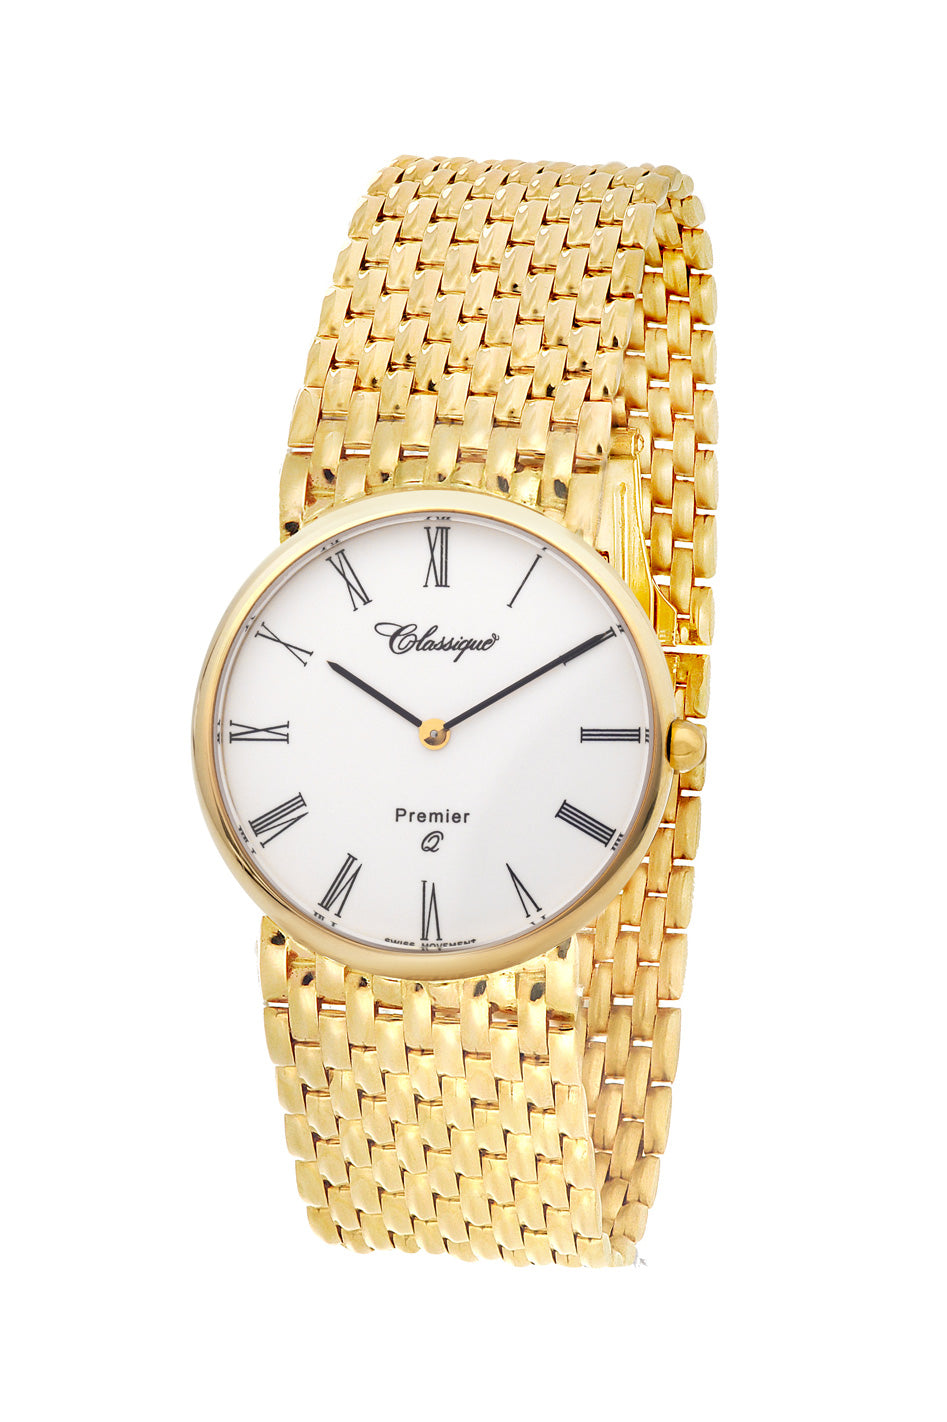 Solid 14ct Gold Swiss Quartz Watch available at LeGassick Diamonds and Jewellery Gold Coast, Australia.